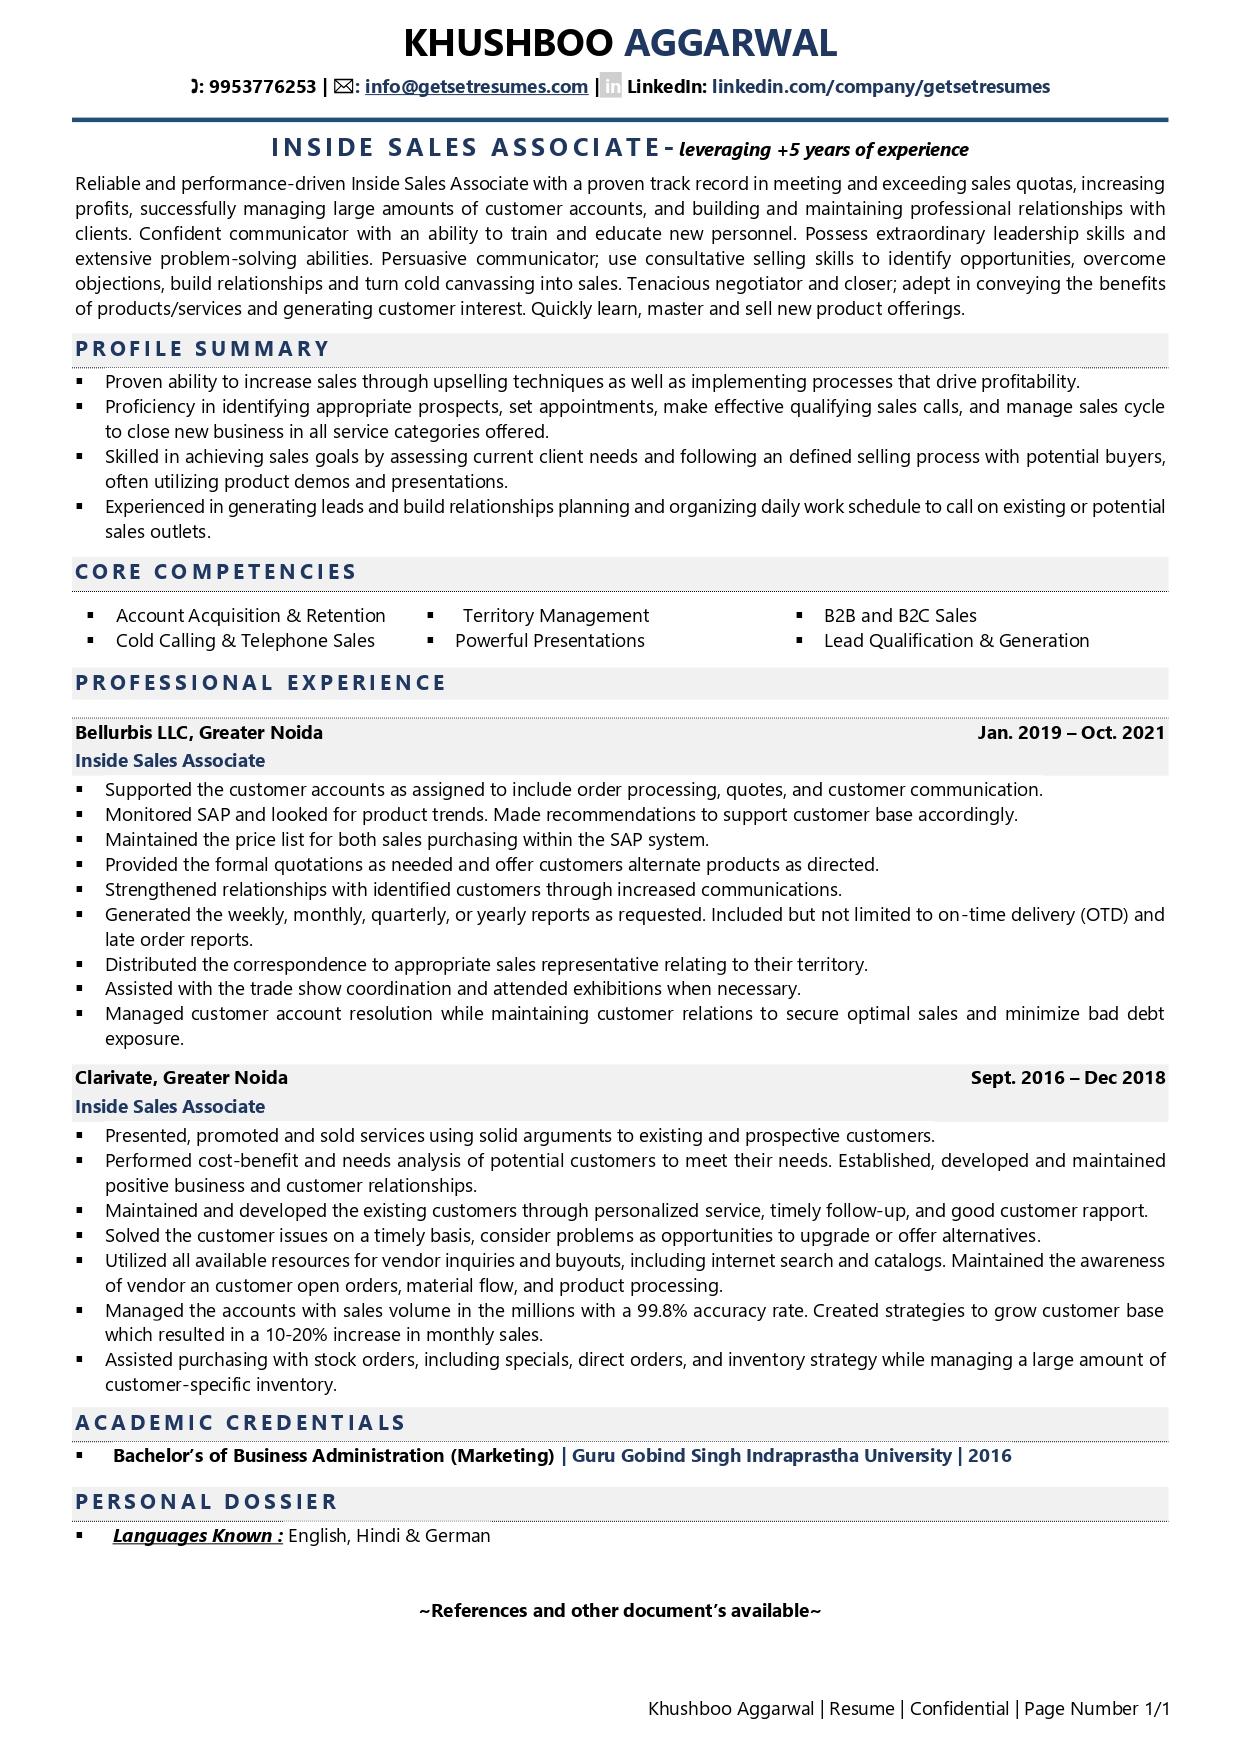 inside sales associate job description for resume